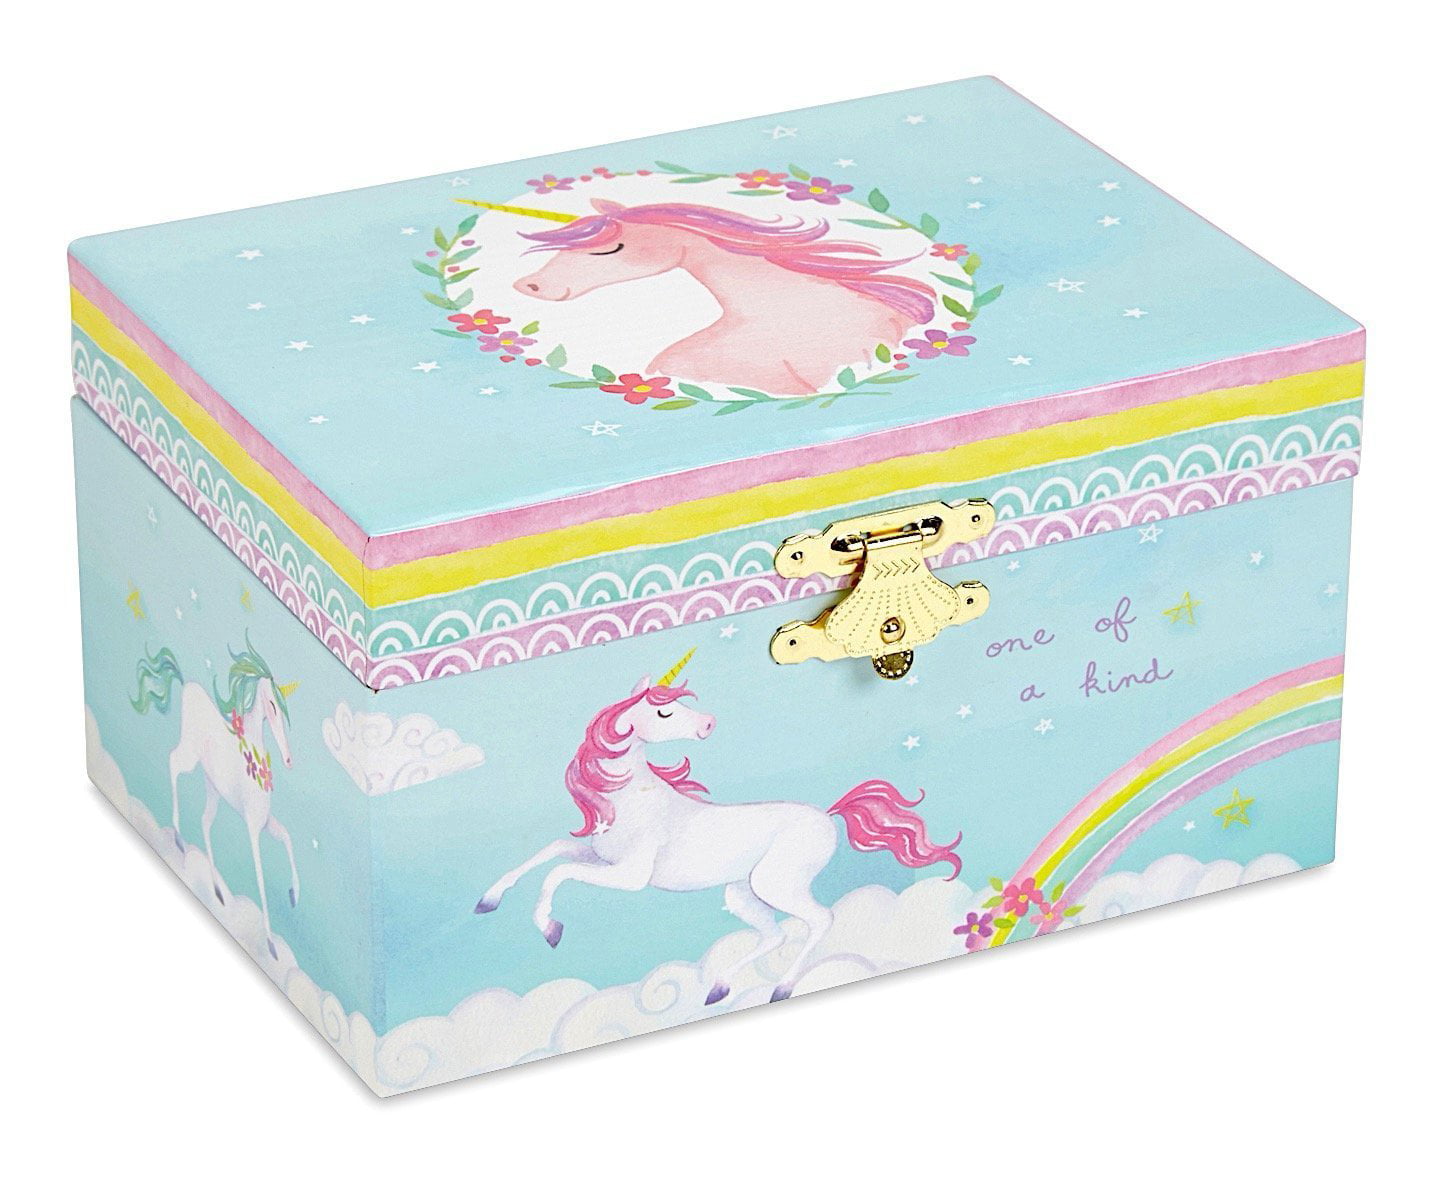 The Unicorn Tune Jewelkeeper Girls Musical Jewellery Storage Box with Spinning Unicorn Rainbow Design 